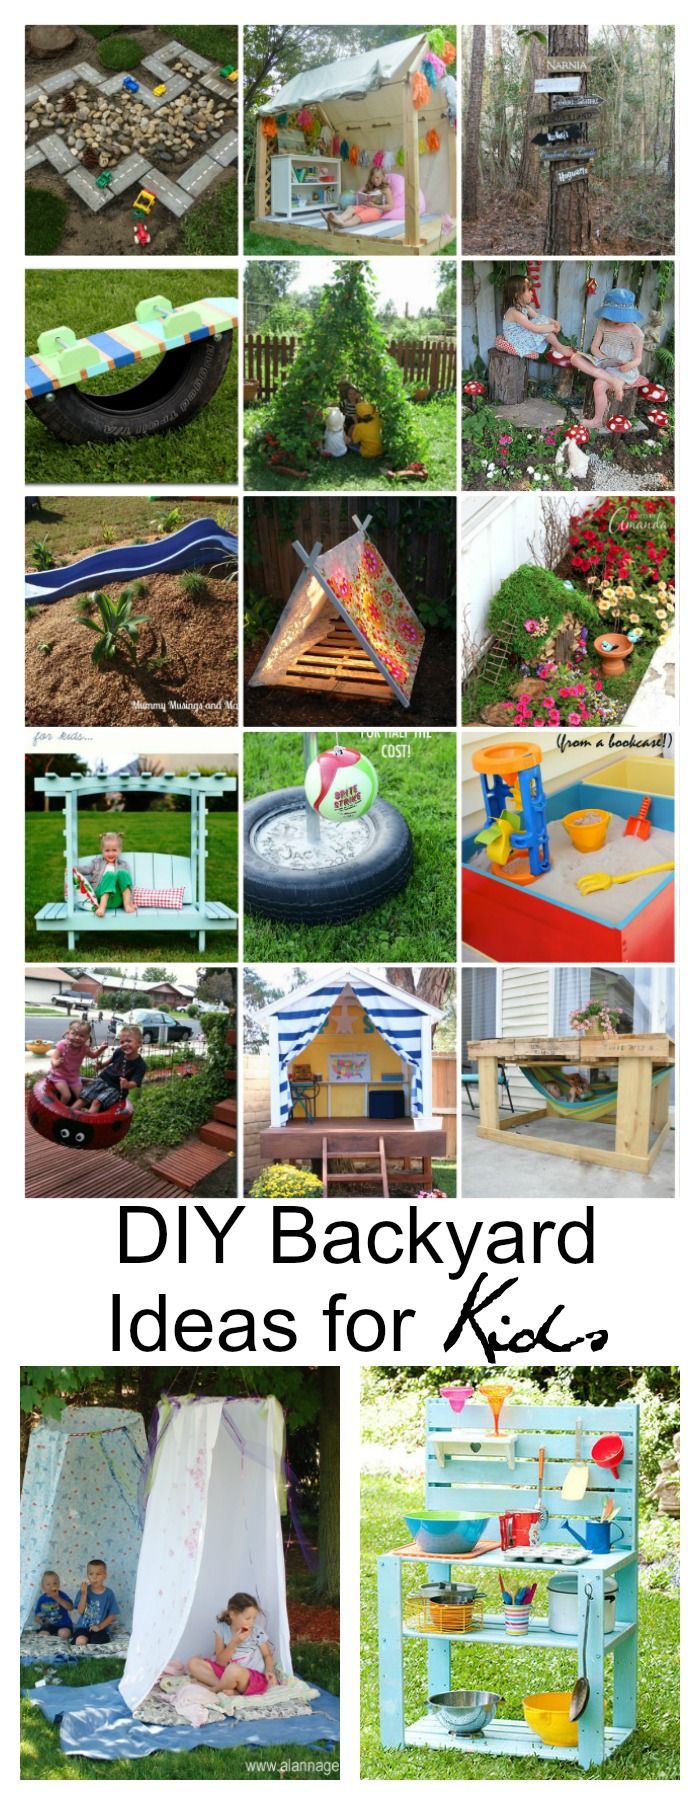 DIY Backyard Ideas for Kids